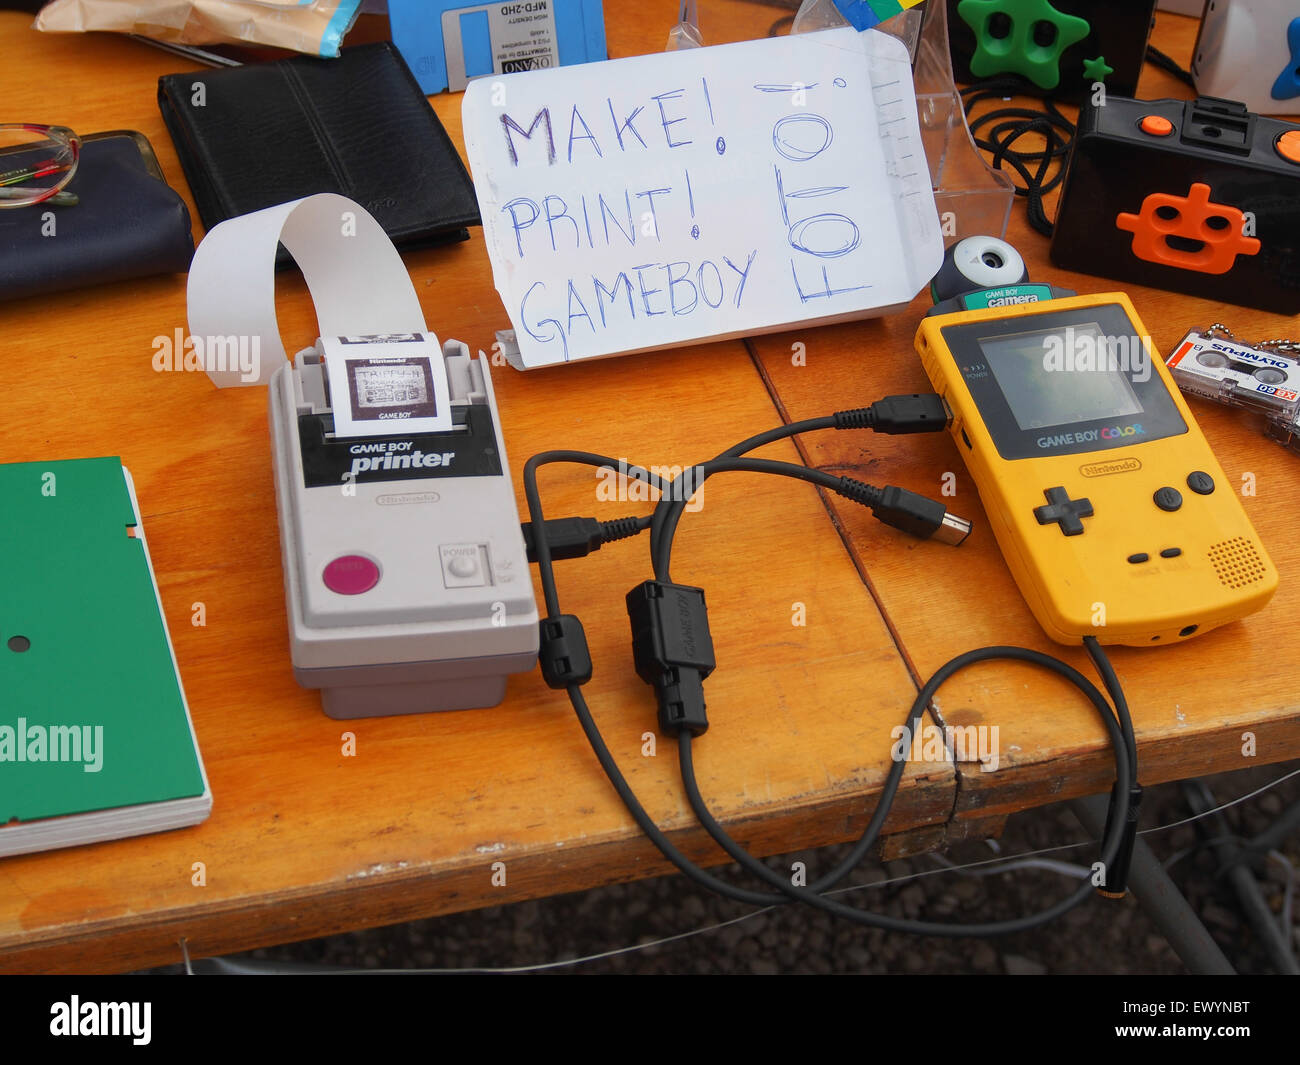 Game boy camera with printer printing Stock Photo